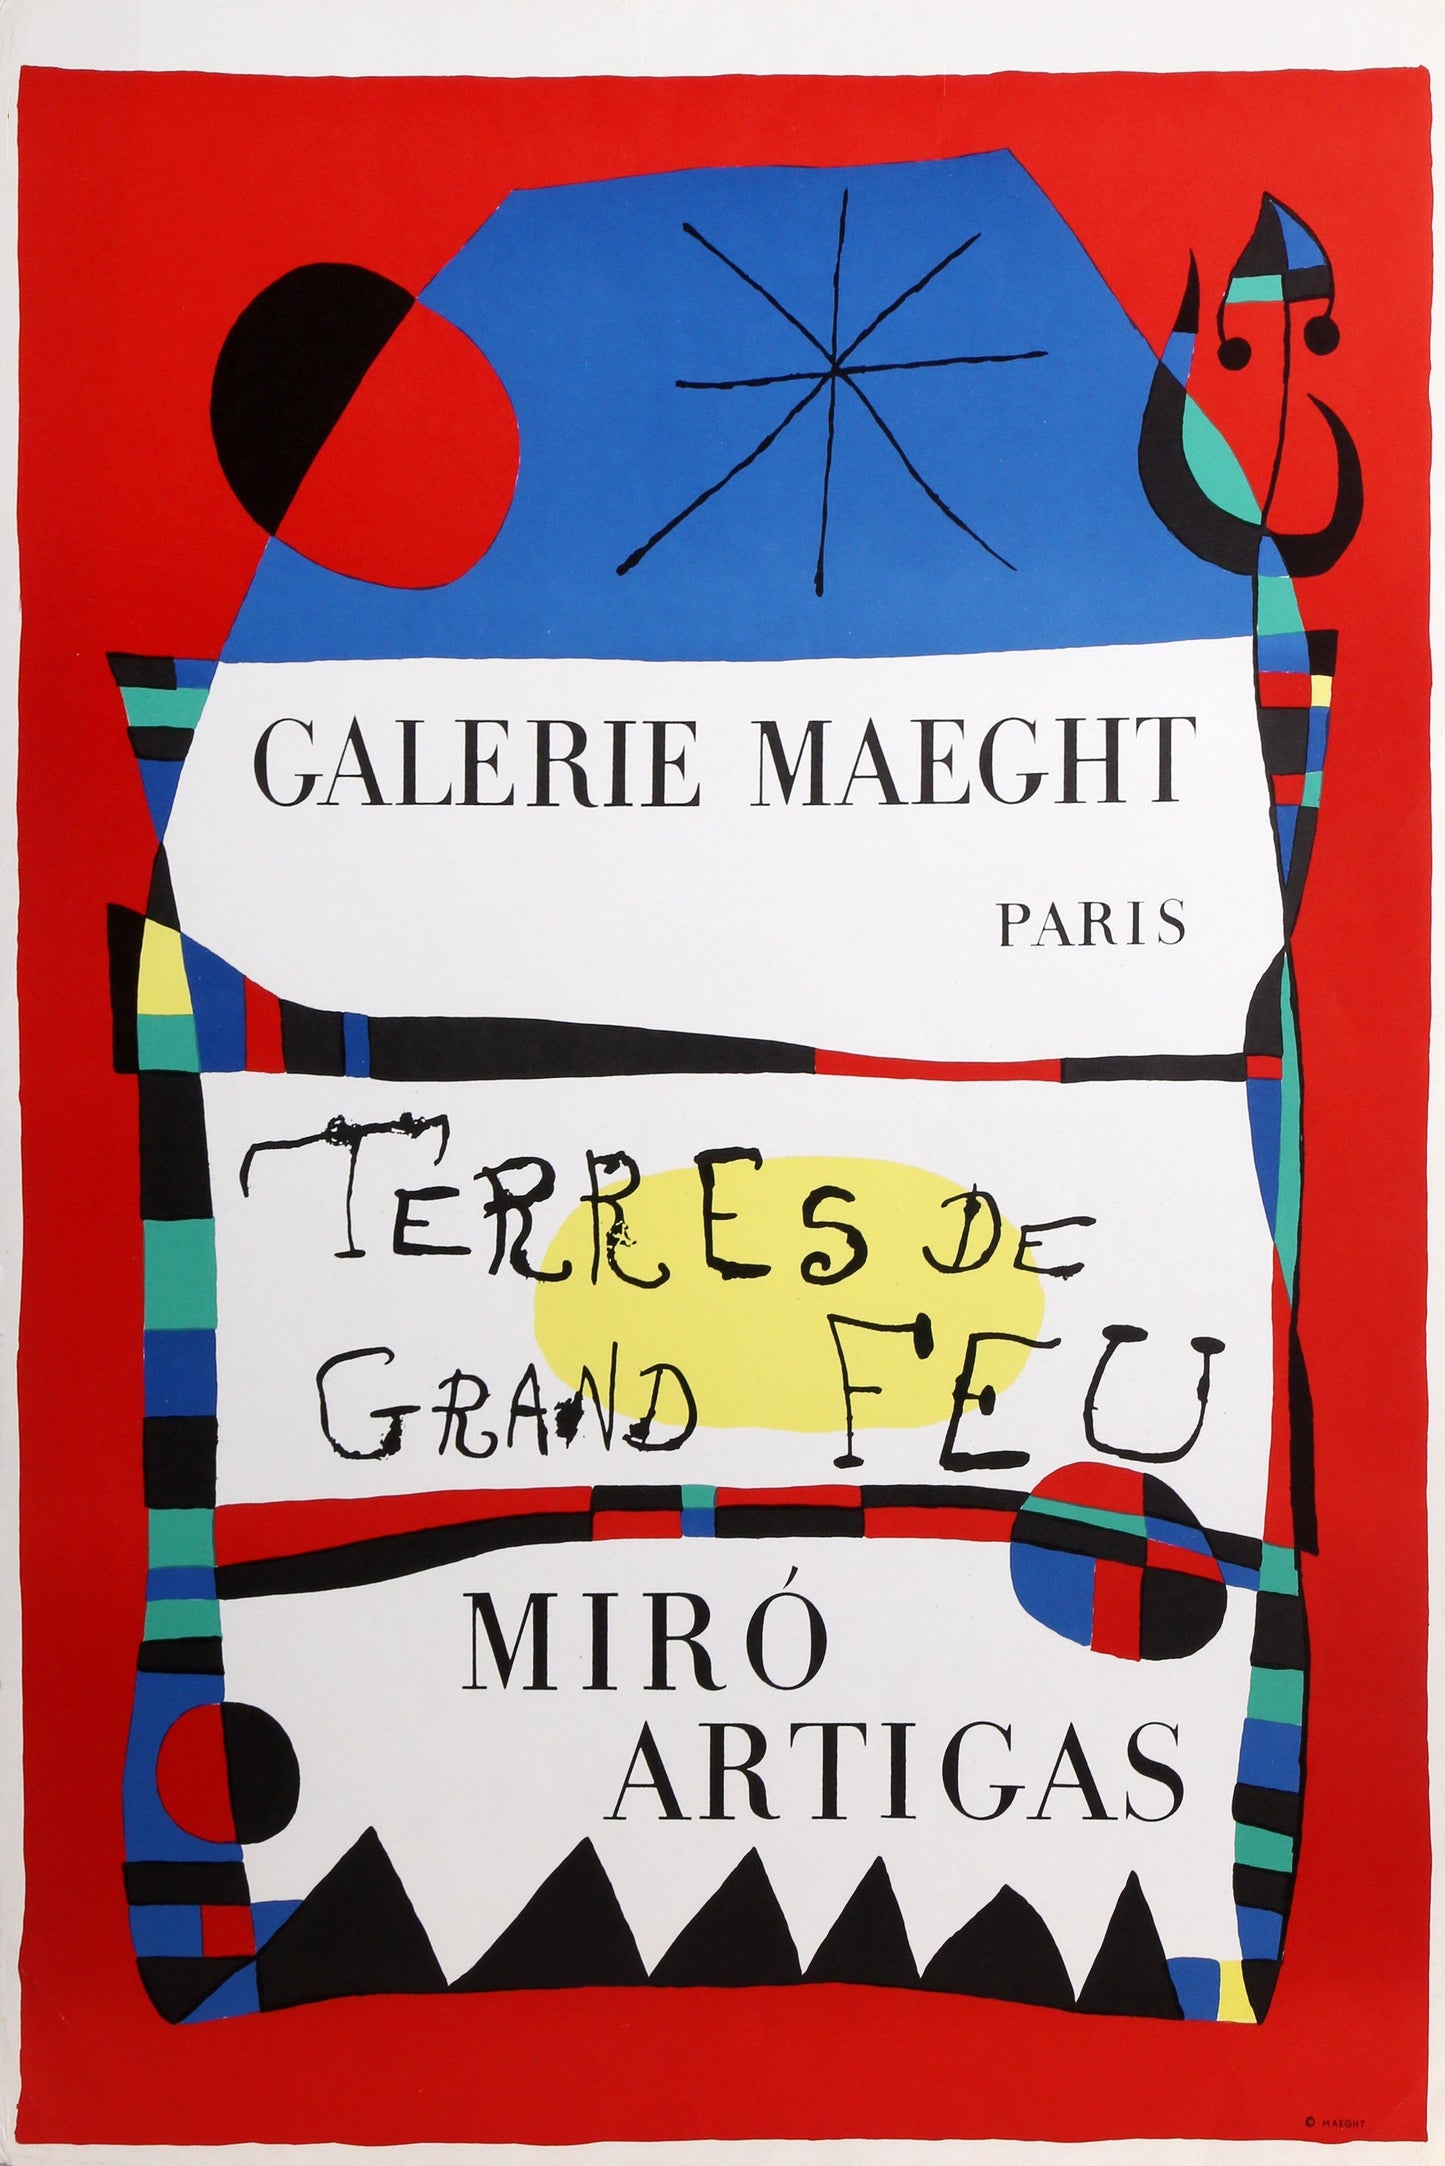 Joan Miro Exhibition Poster for Galerie Maeght: "Terres de Grand FEU"